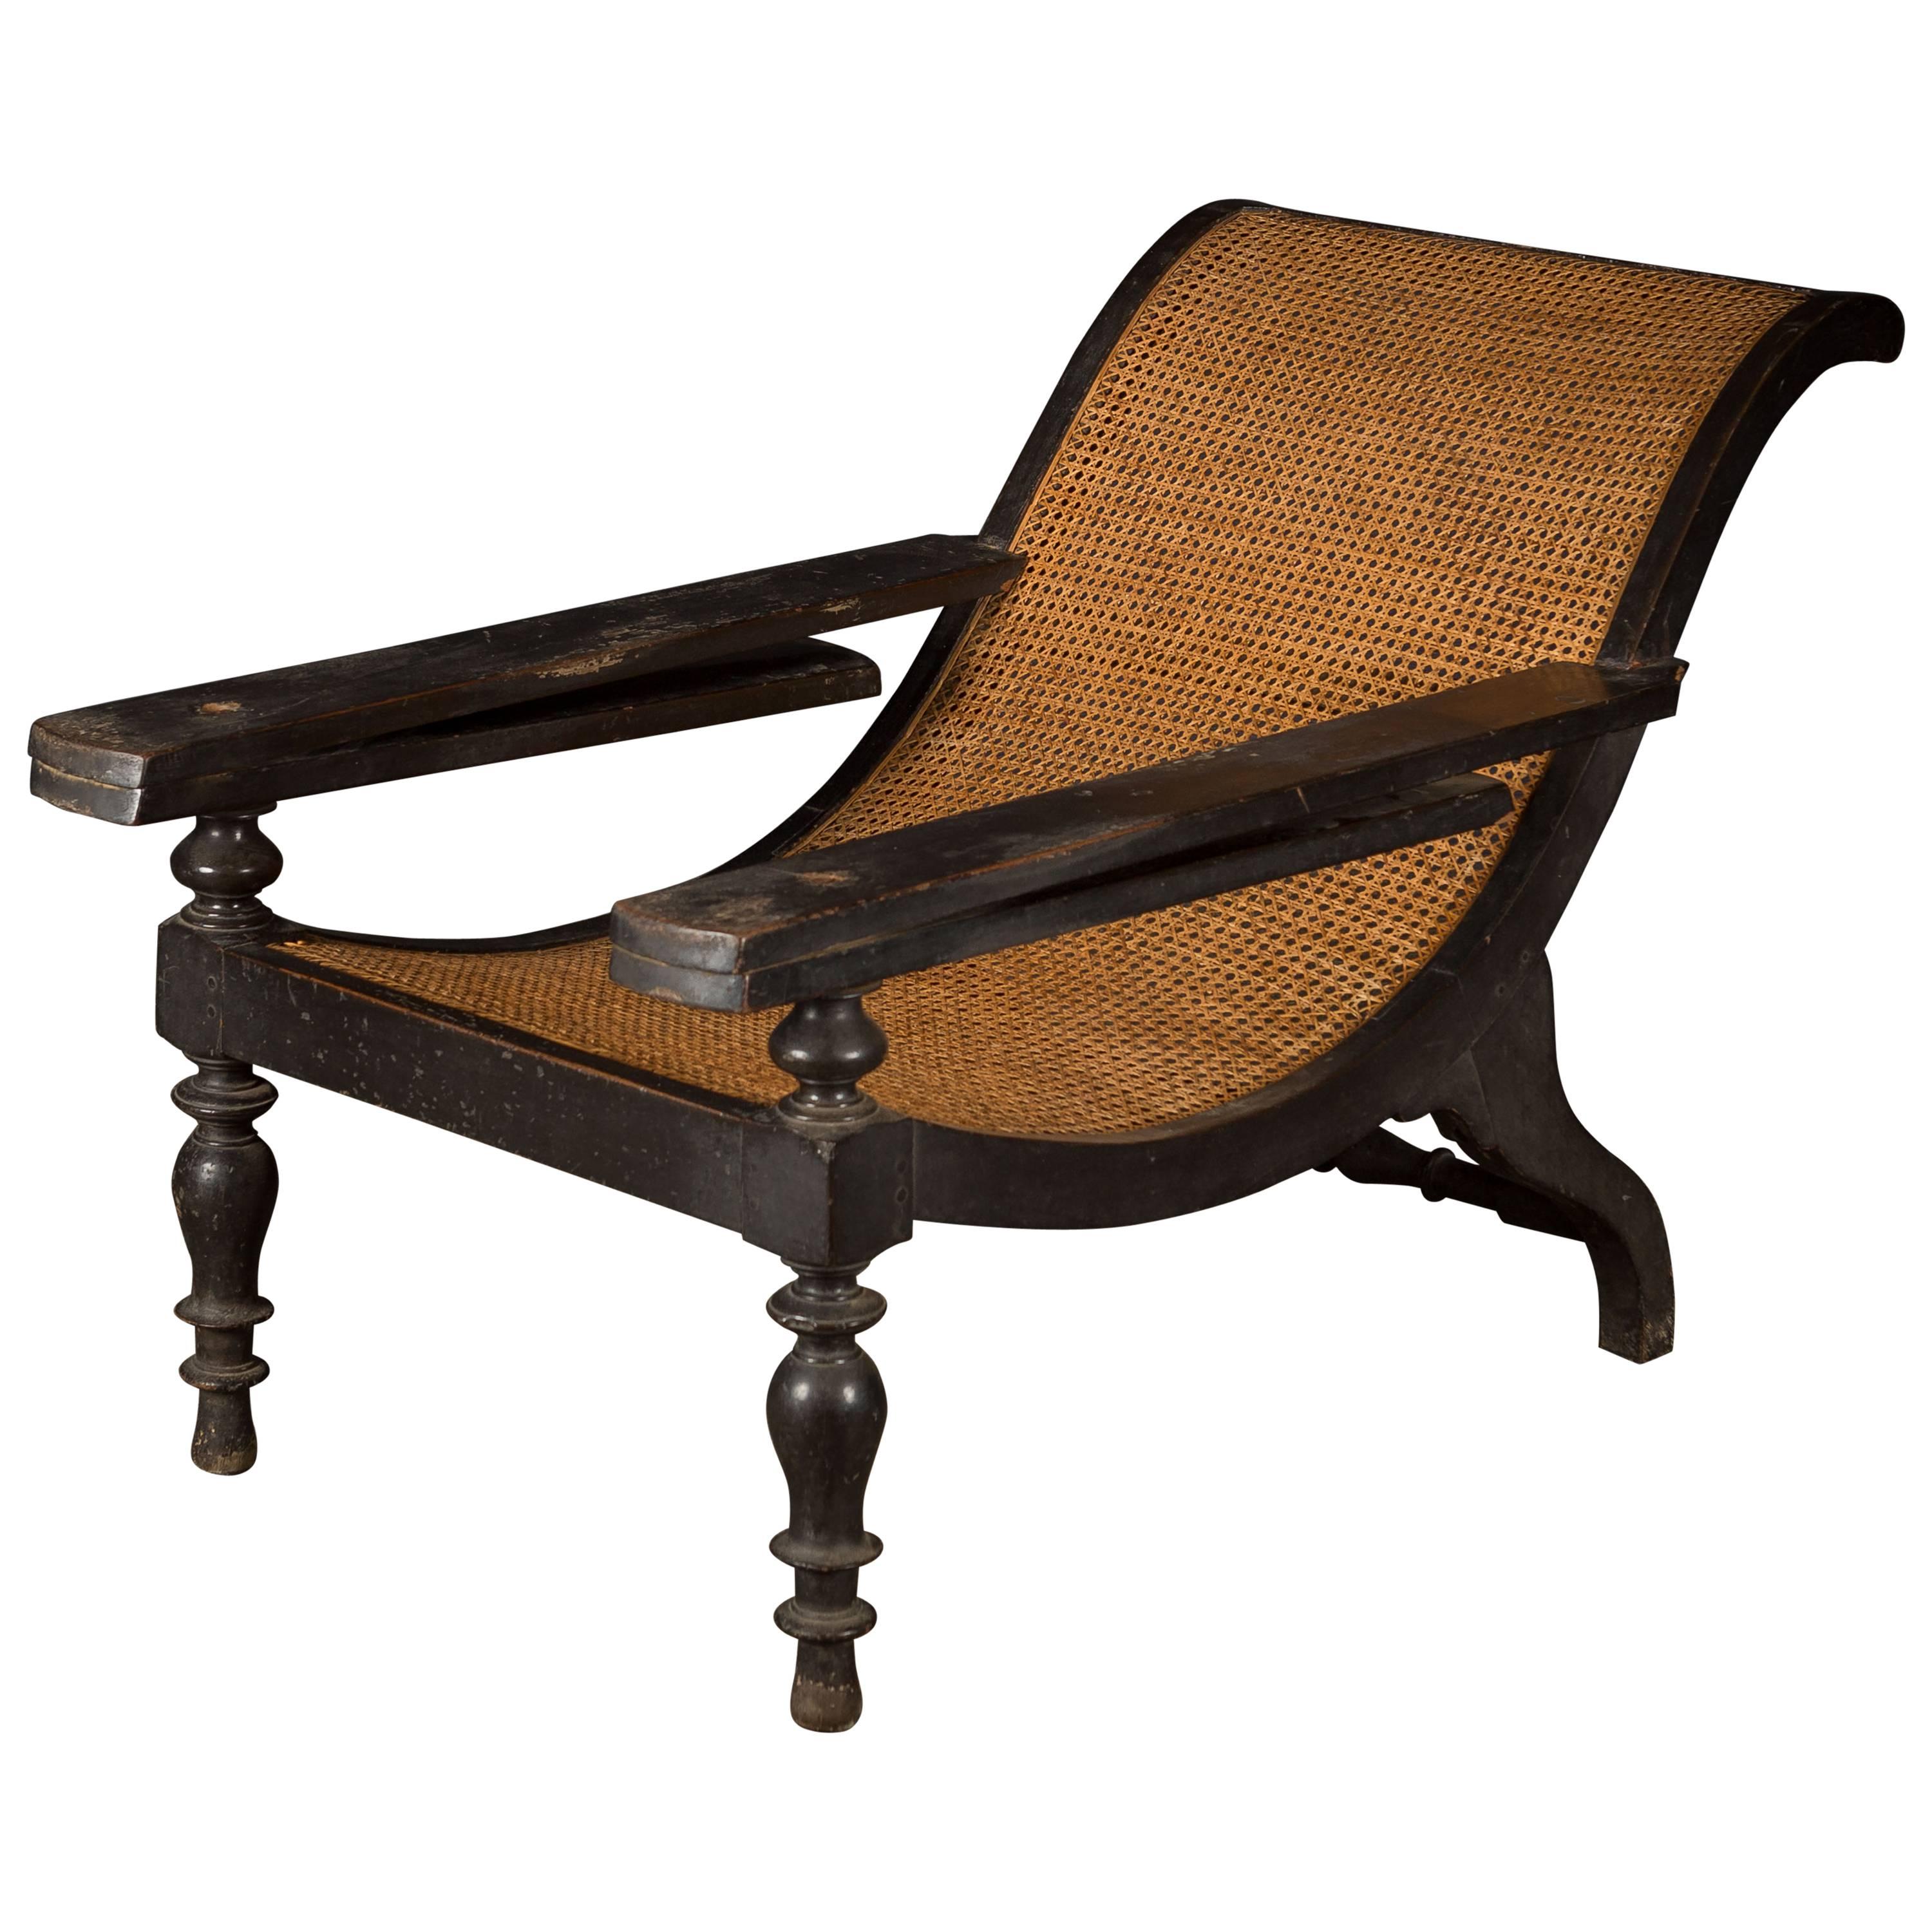 19th Century British Colonial Planter's Plantation Chair